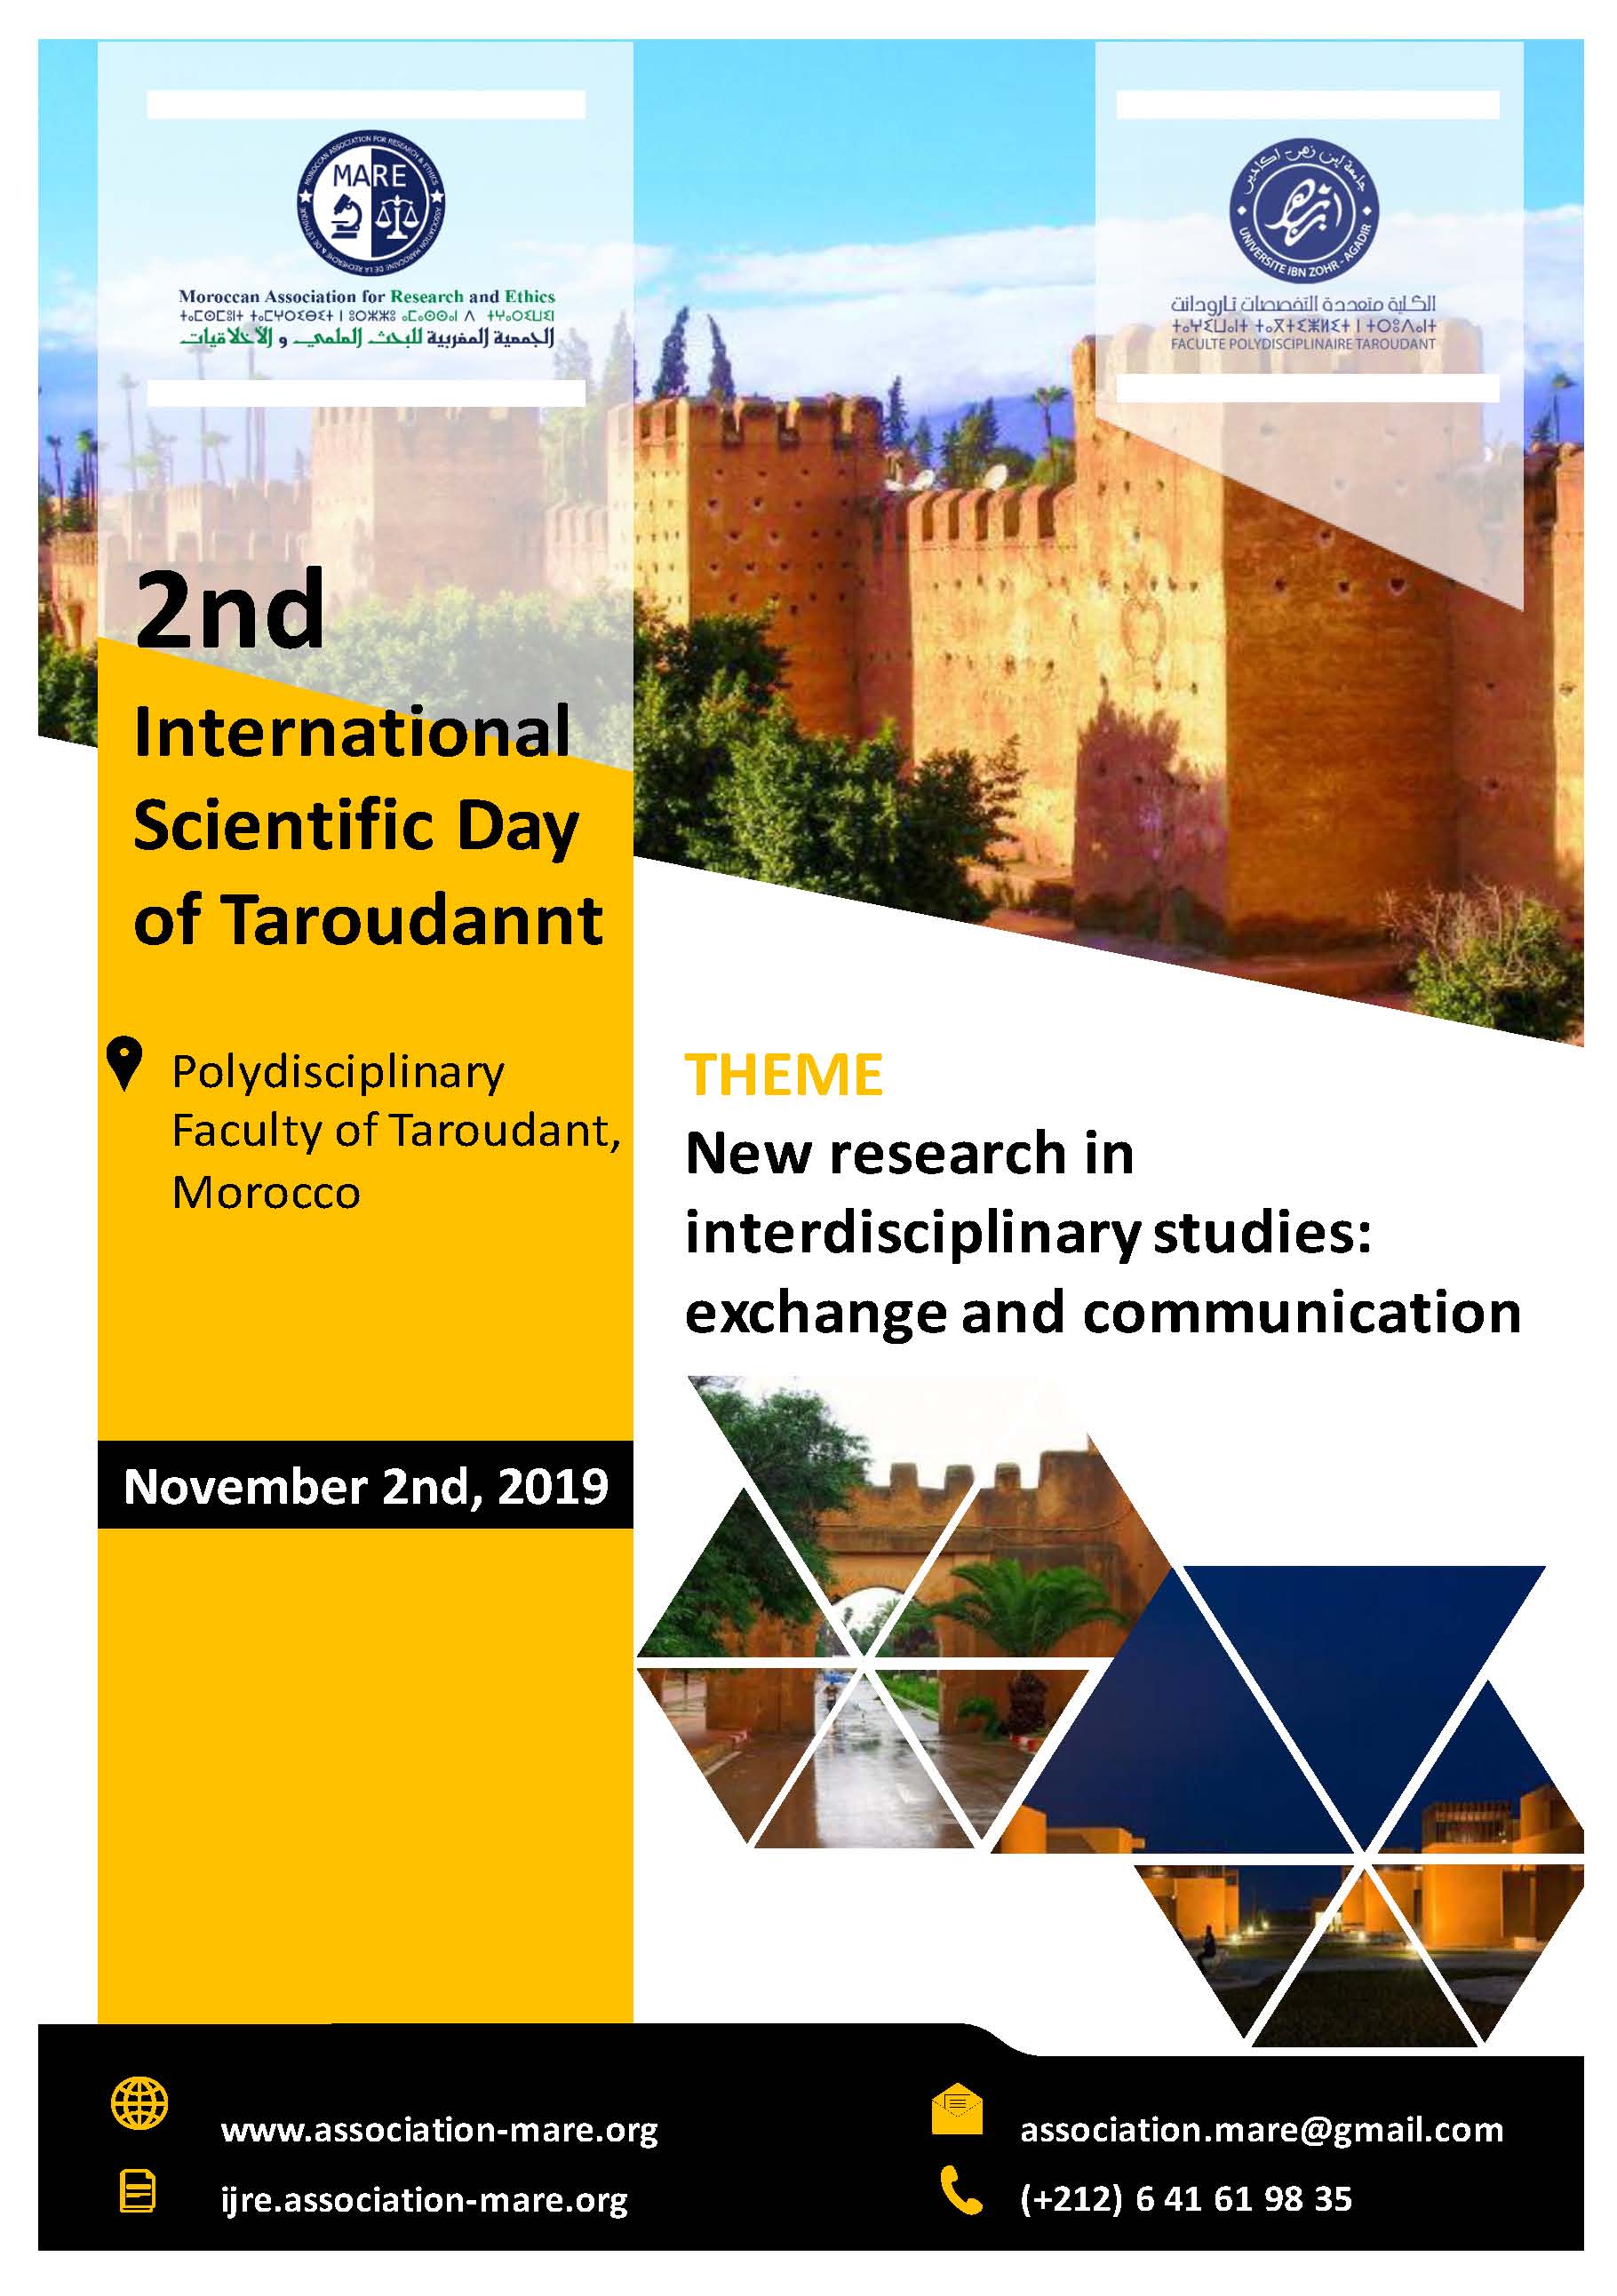 Program of the 2nd International Scientific Day of Taroudannt